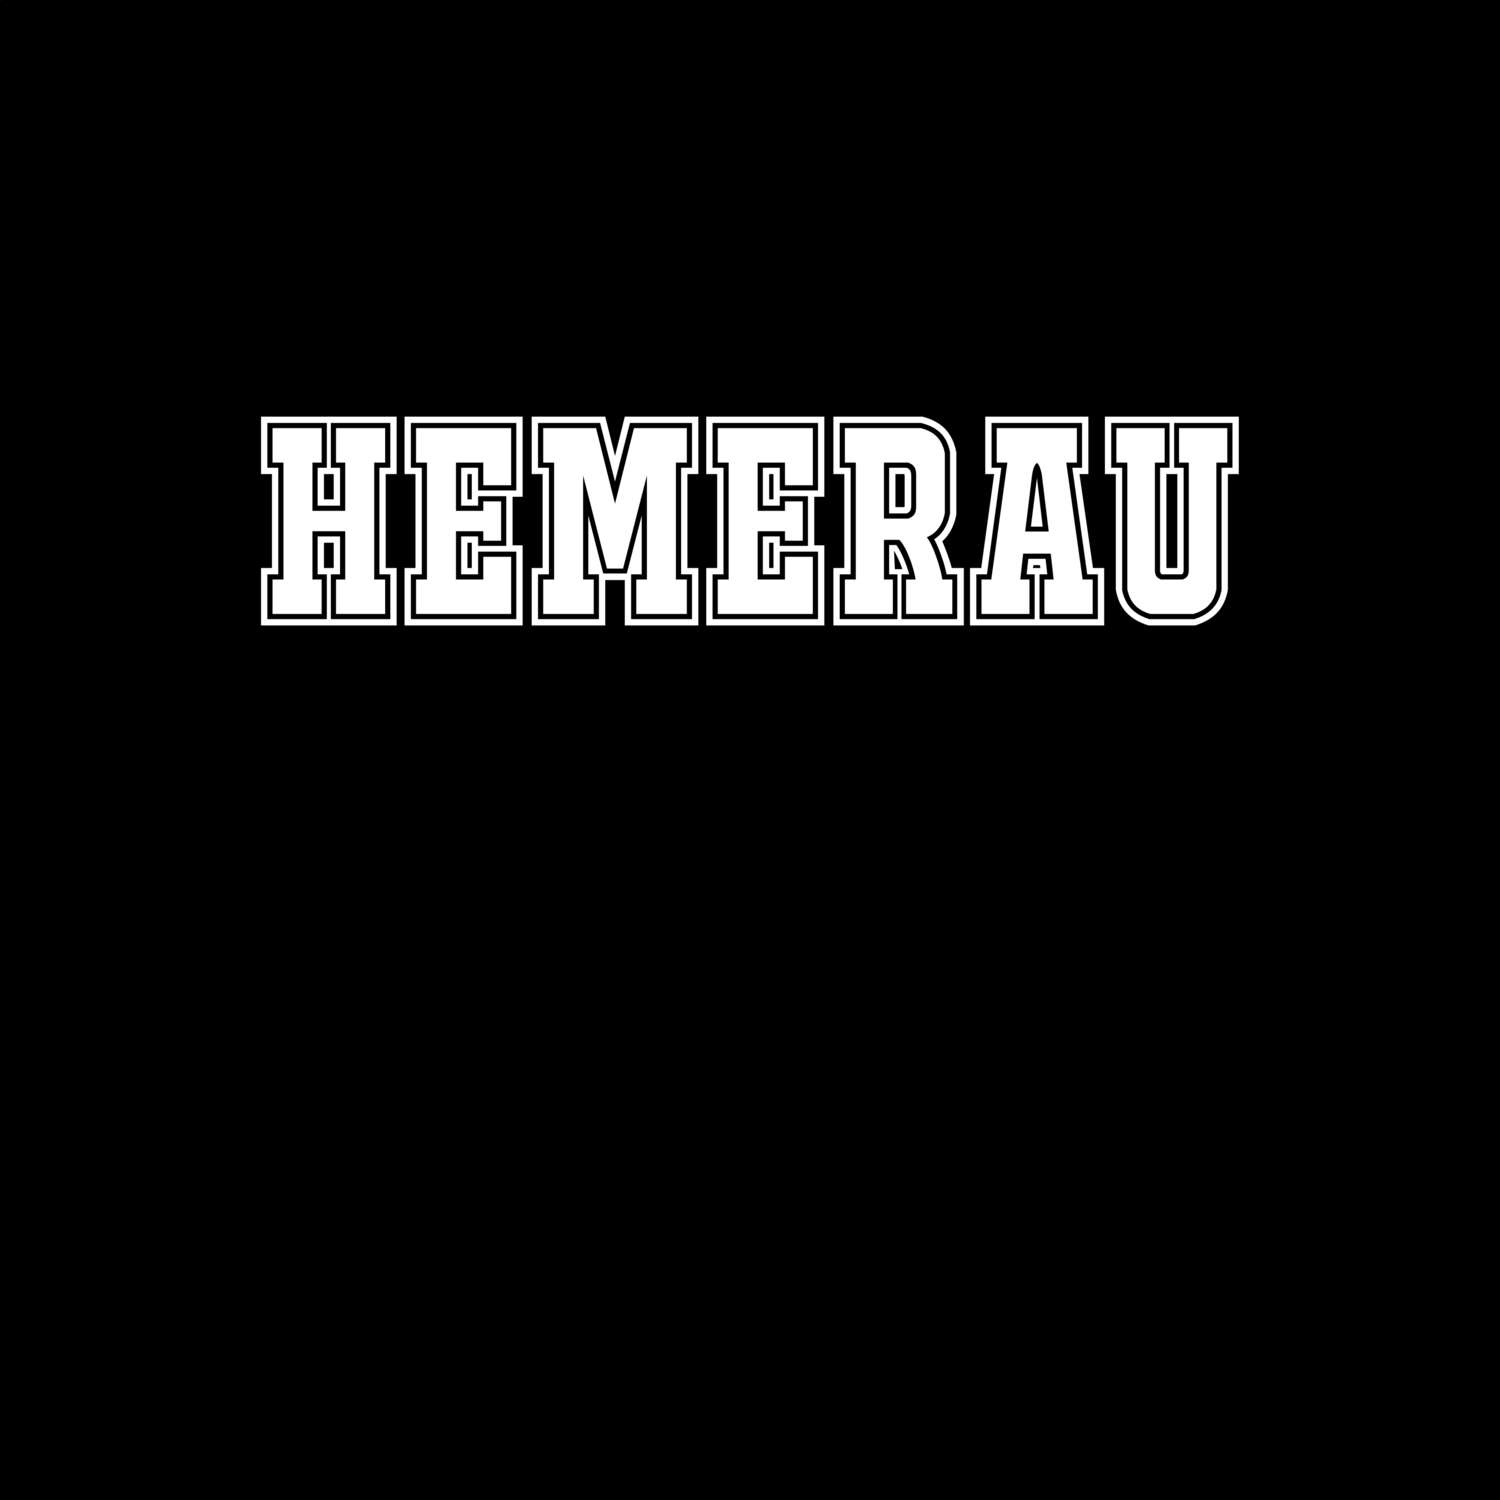 Hemerau T-Shirt »Classic«